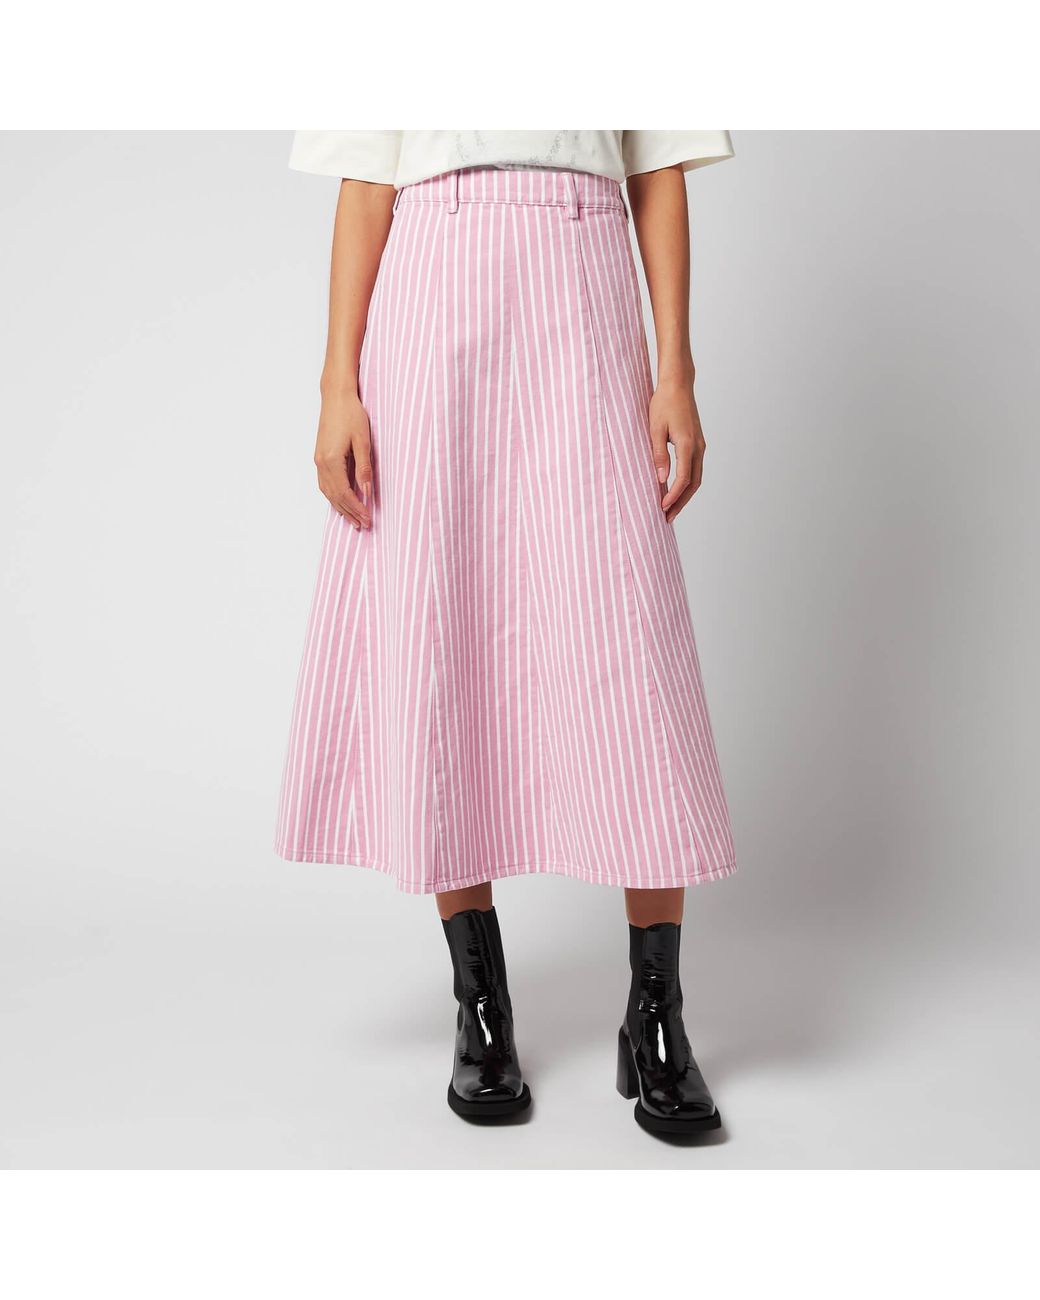 Ganni Stripe Denim Midi Skirt in Pink | Lyst Australia